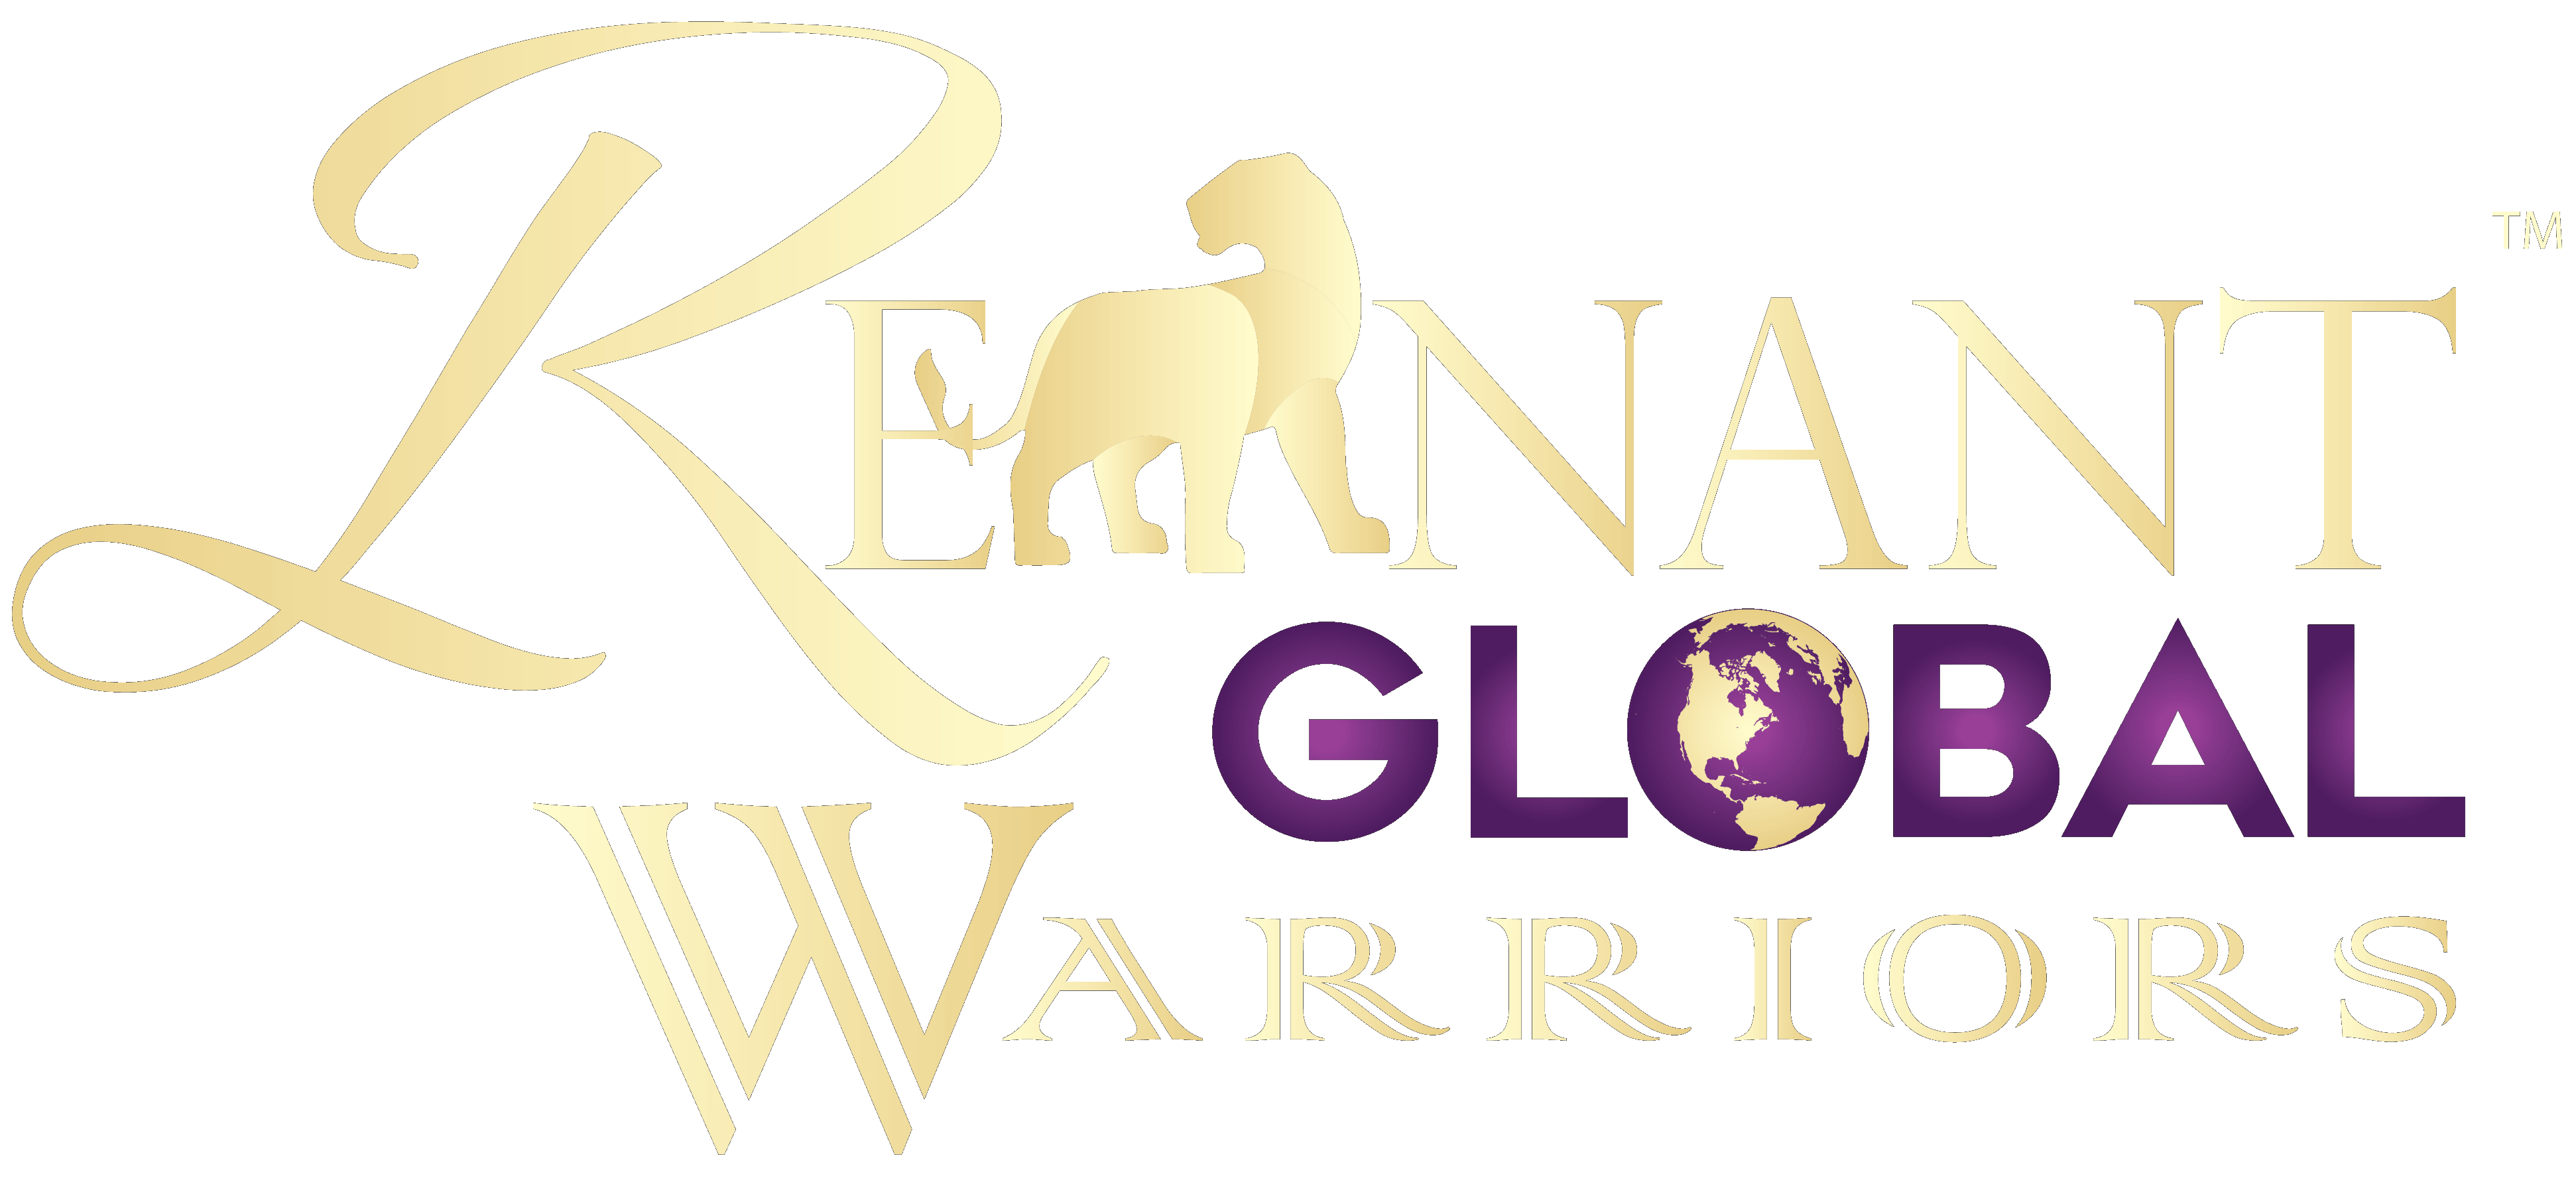 Remnant Logo - Remnant Warriors Global, Inc.